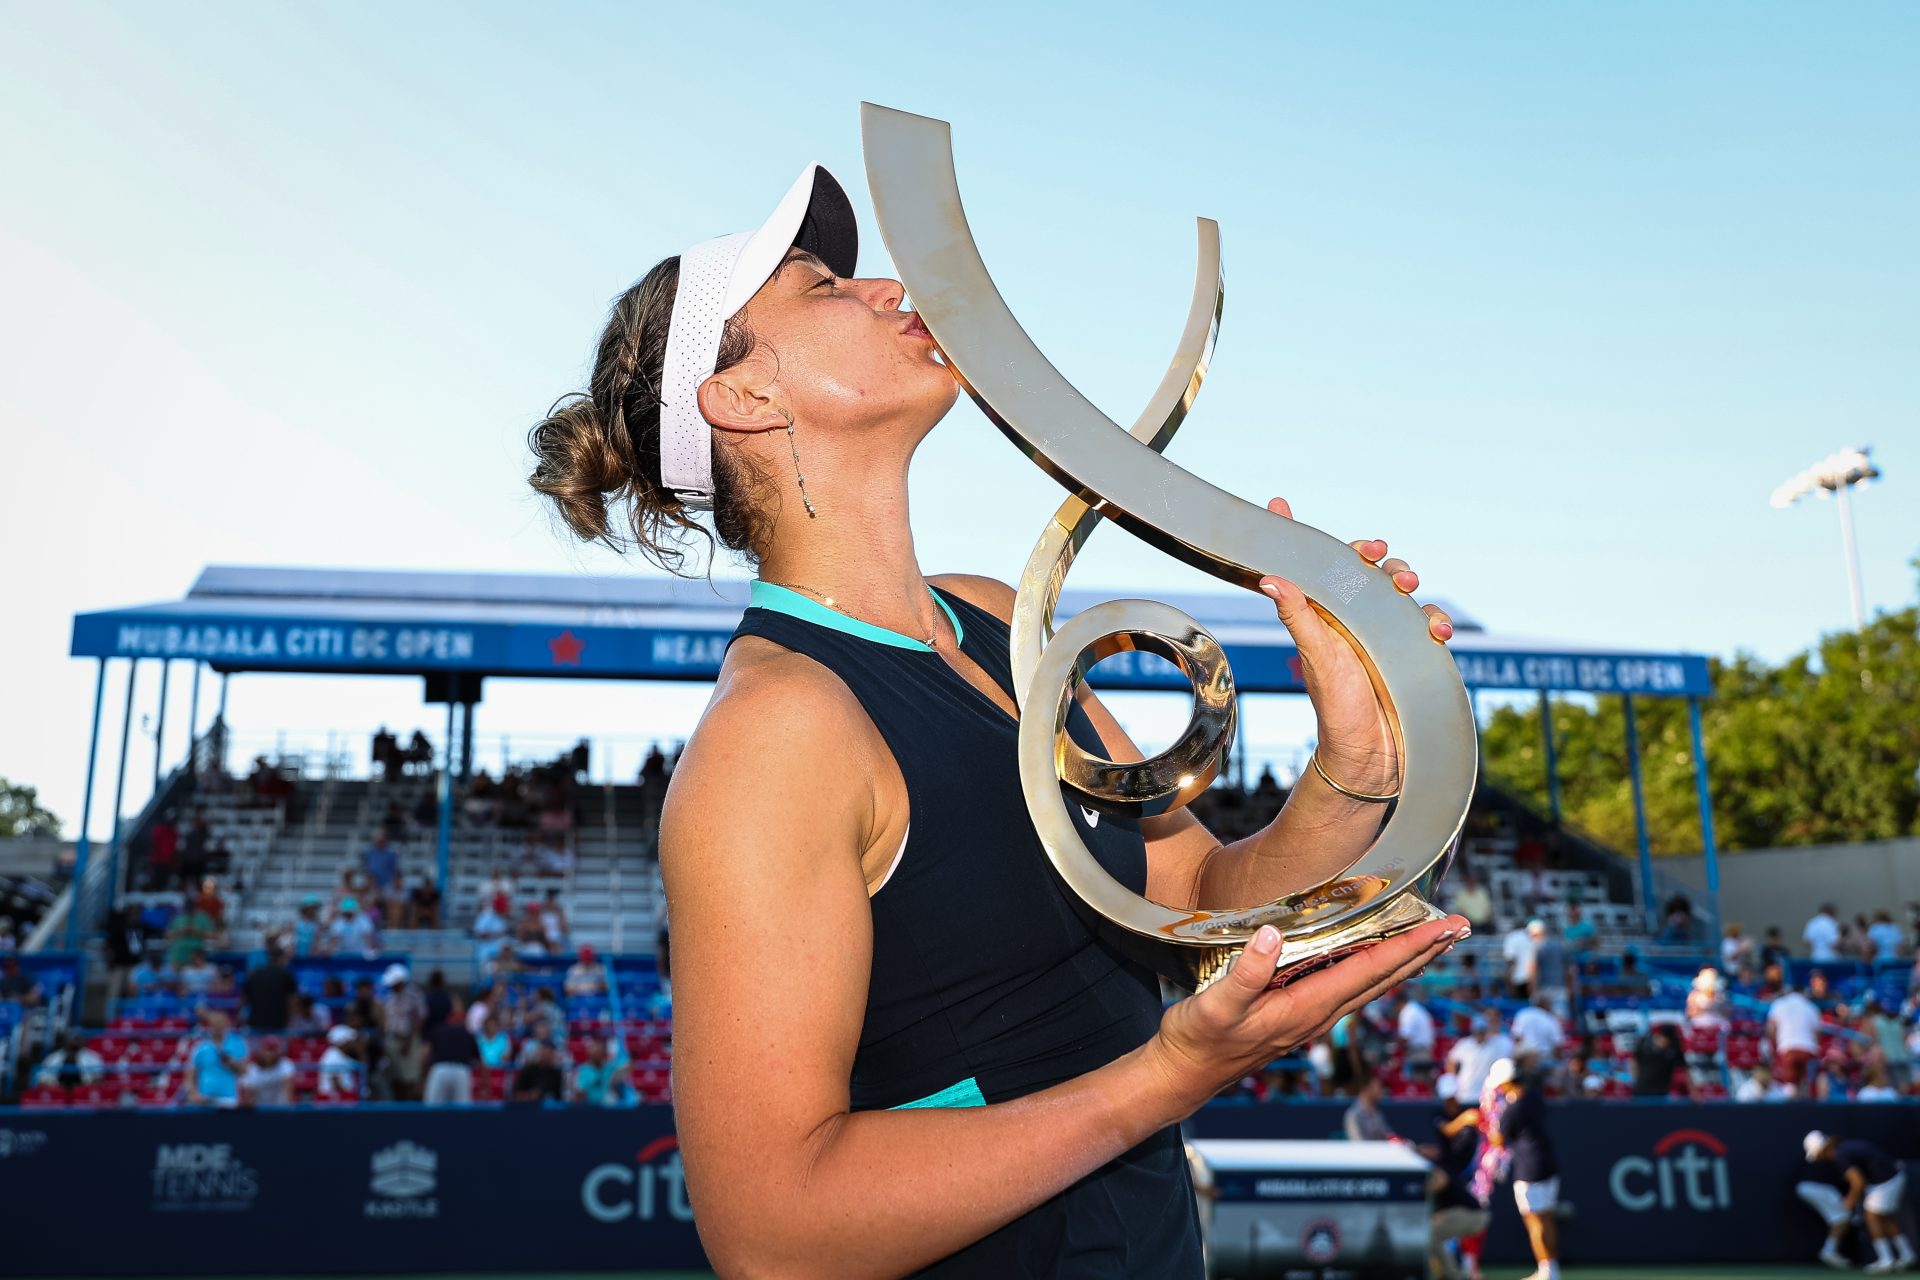 Paula Badosa: The Spanish tennis sensation's difficult road to stardom